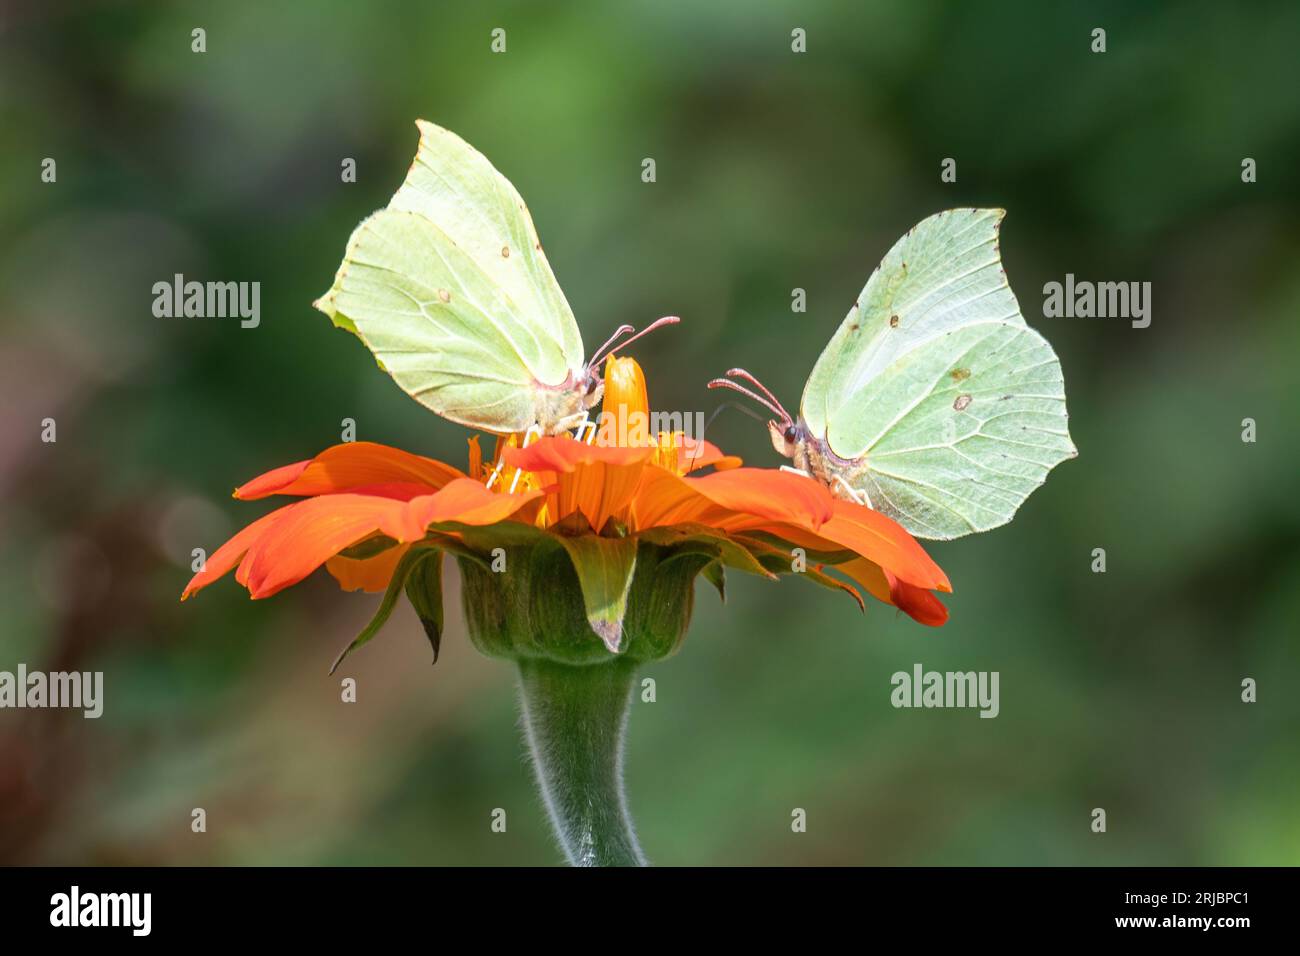 Brimstone butterflies (Gonepteryx rhamni) on orange mexican sunflower (Tithonia rotundifolia 'Torch') flowers in a garden during summer, England, UK Stock Photo